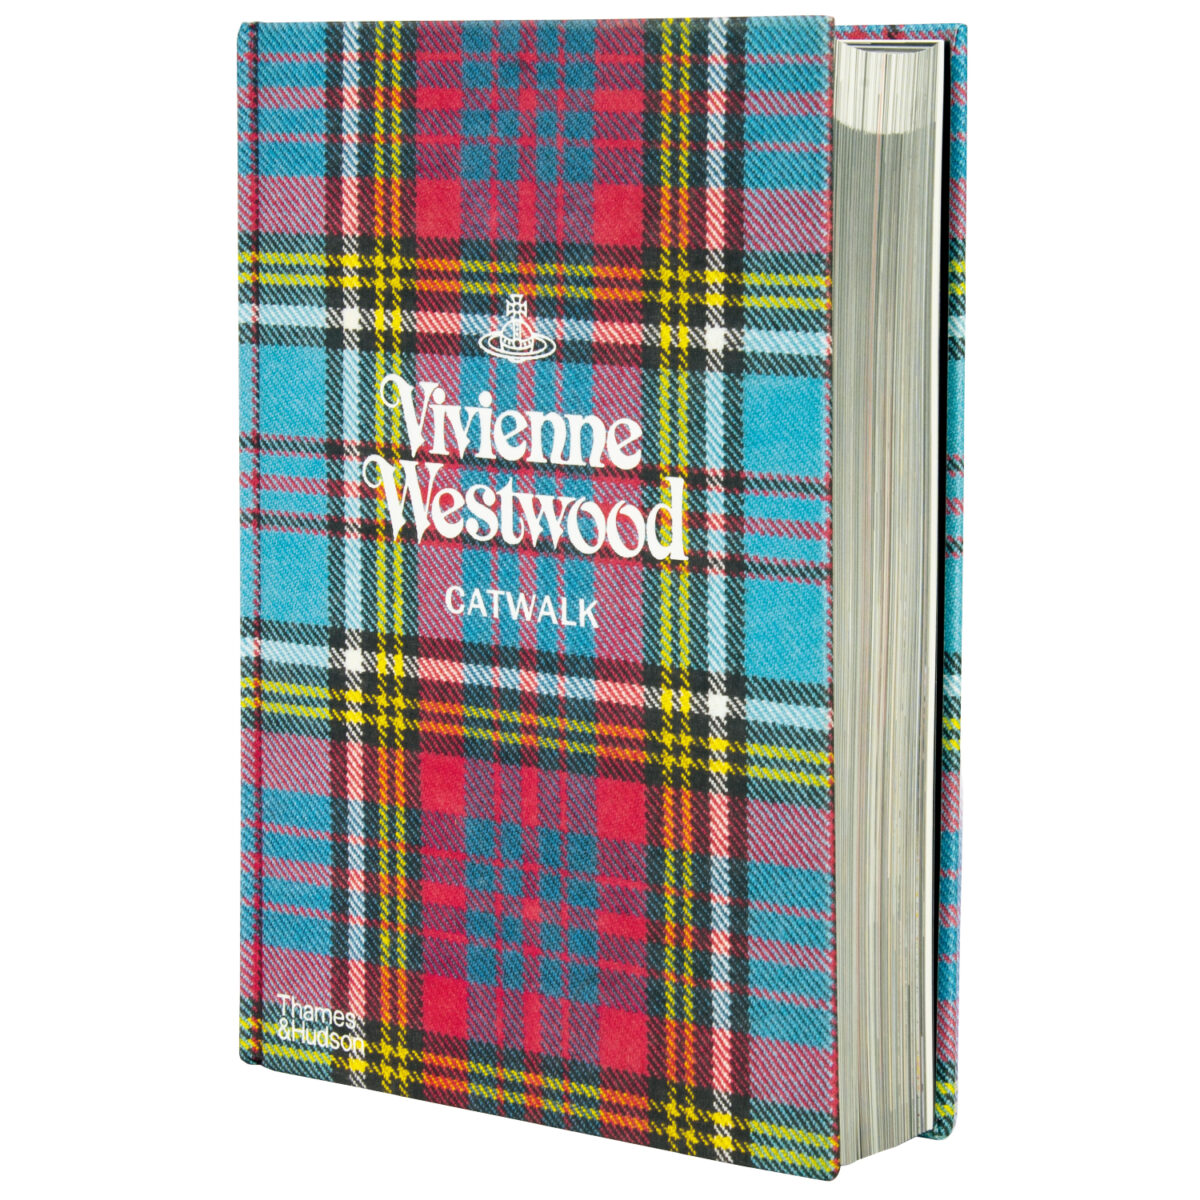 Vivienne Westwood（ヴィヴィアン・ウエストウッド）は永遠に – 装苑ONLINE